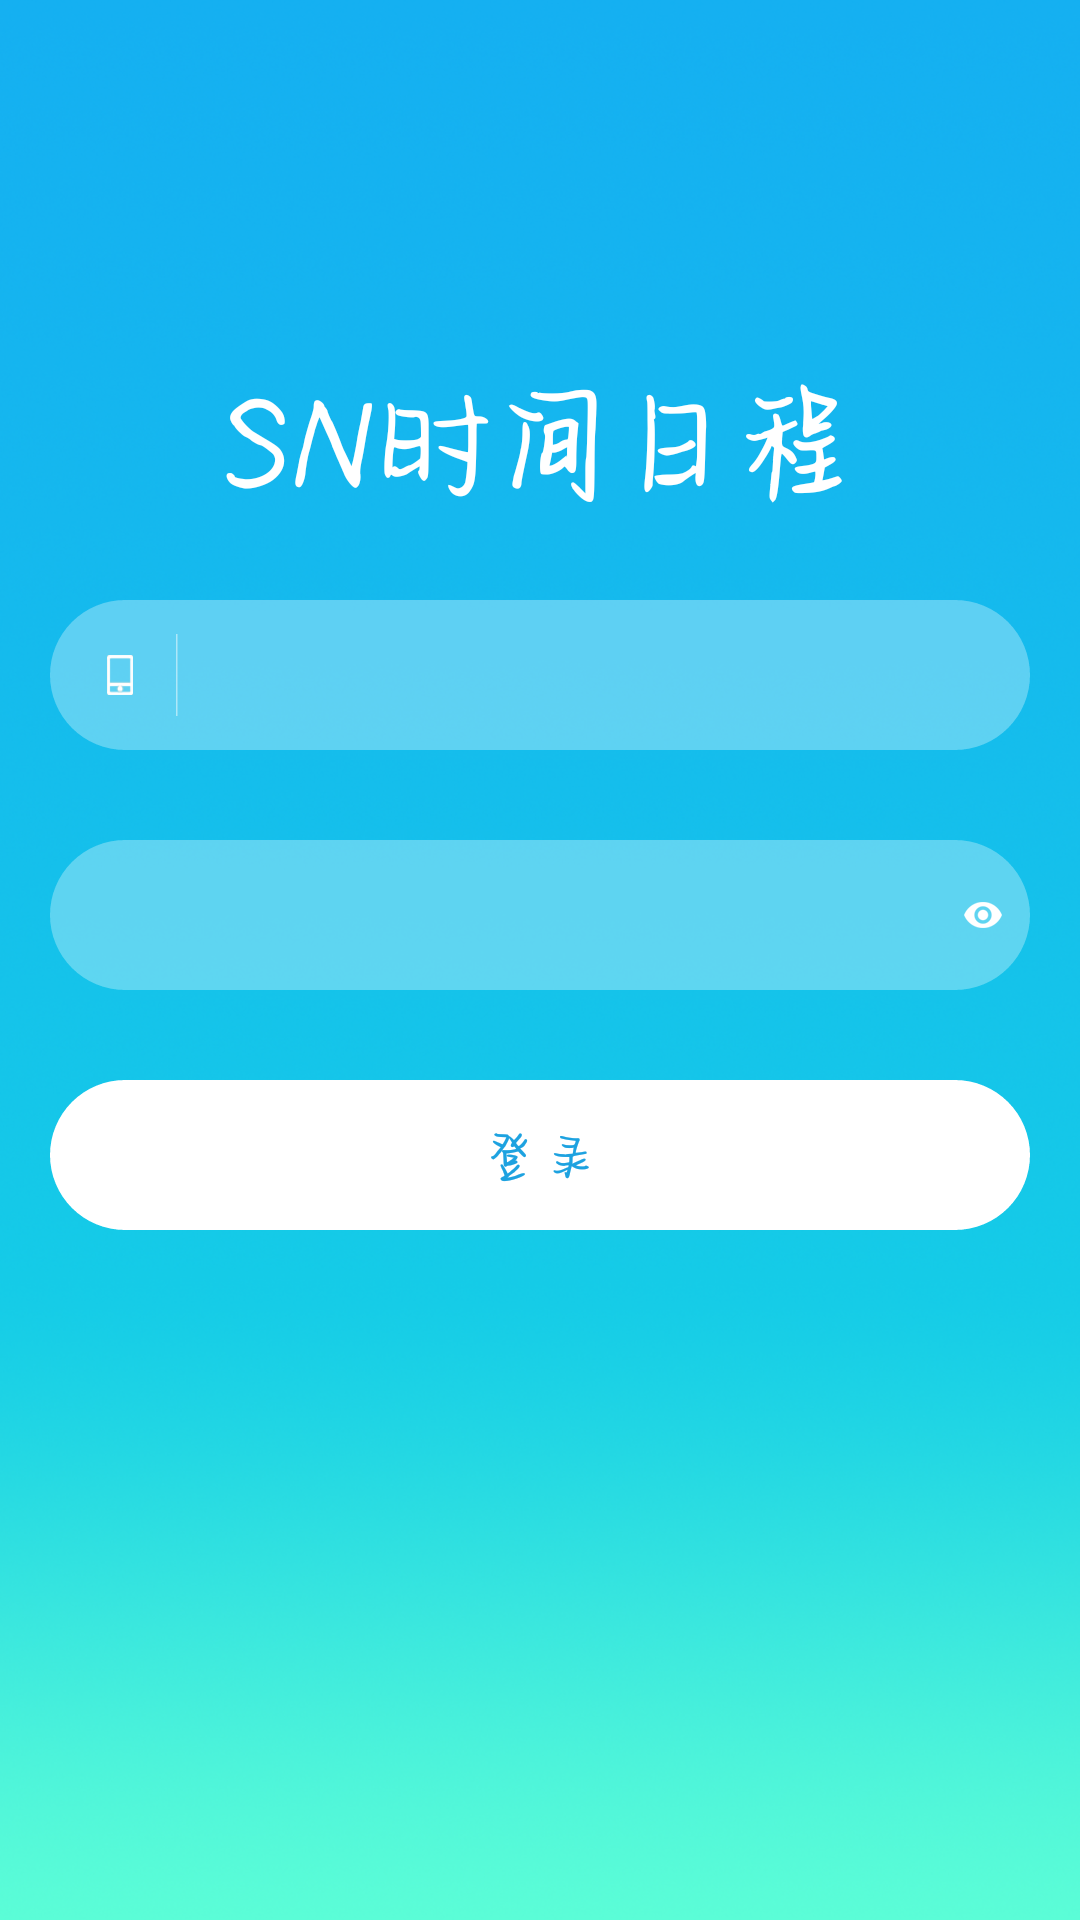 SN时间日程最新版手机app下载-SN时间日程无广告版下载